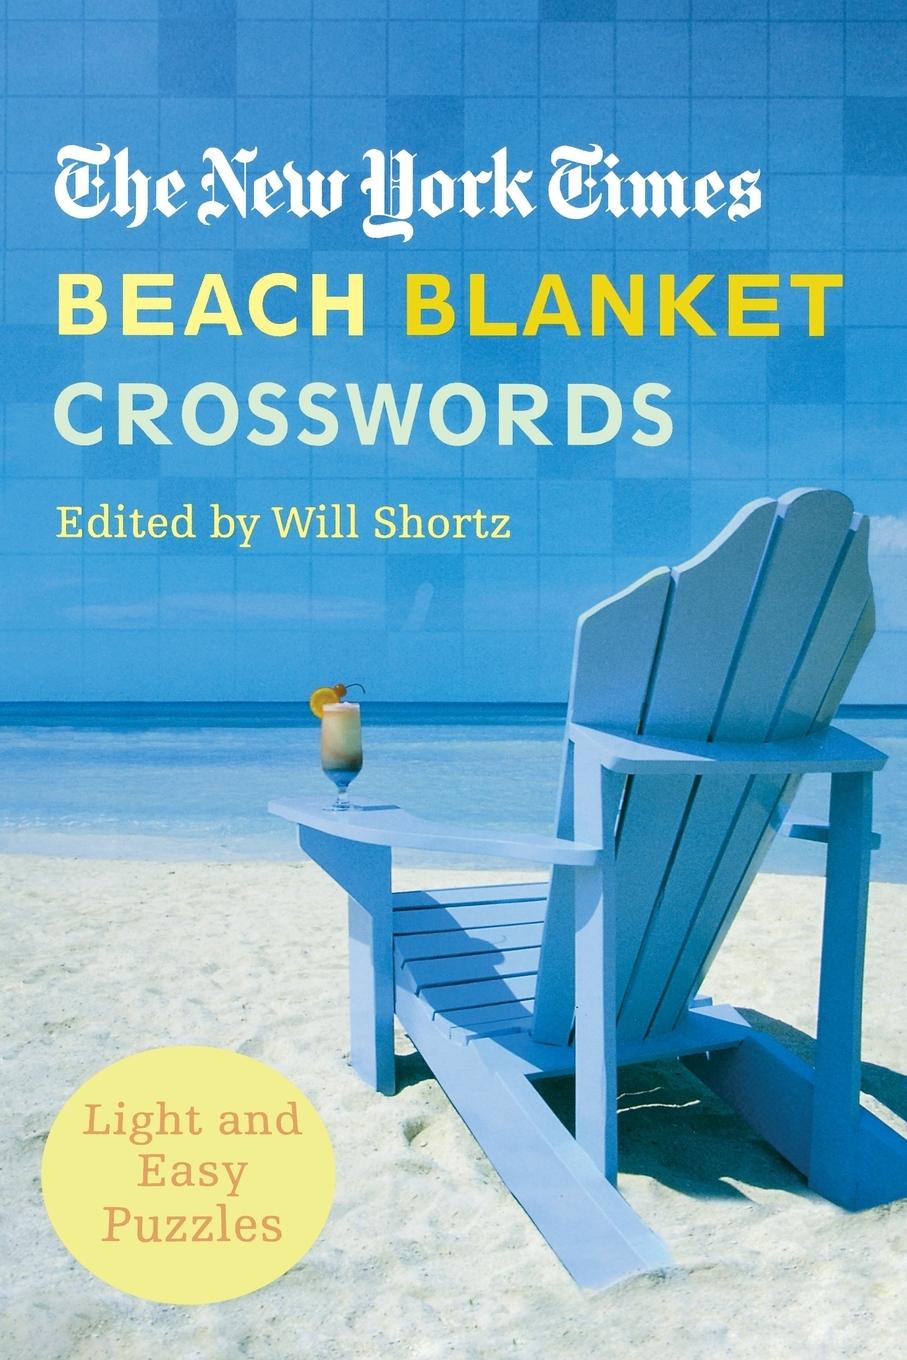 The New York Times Beach Blanket Crosswords - New York Times